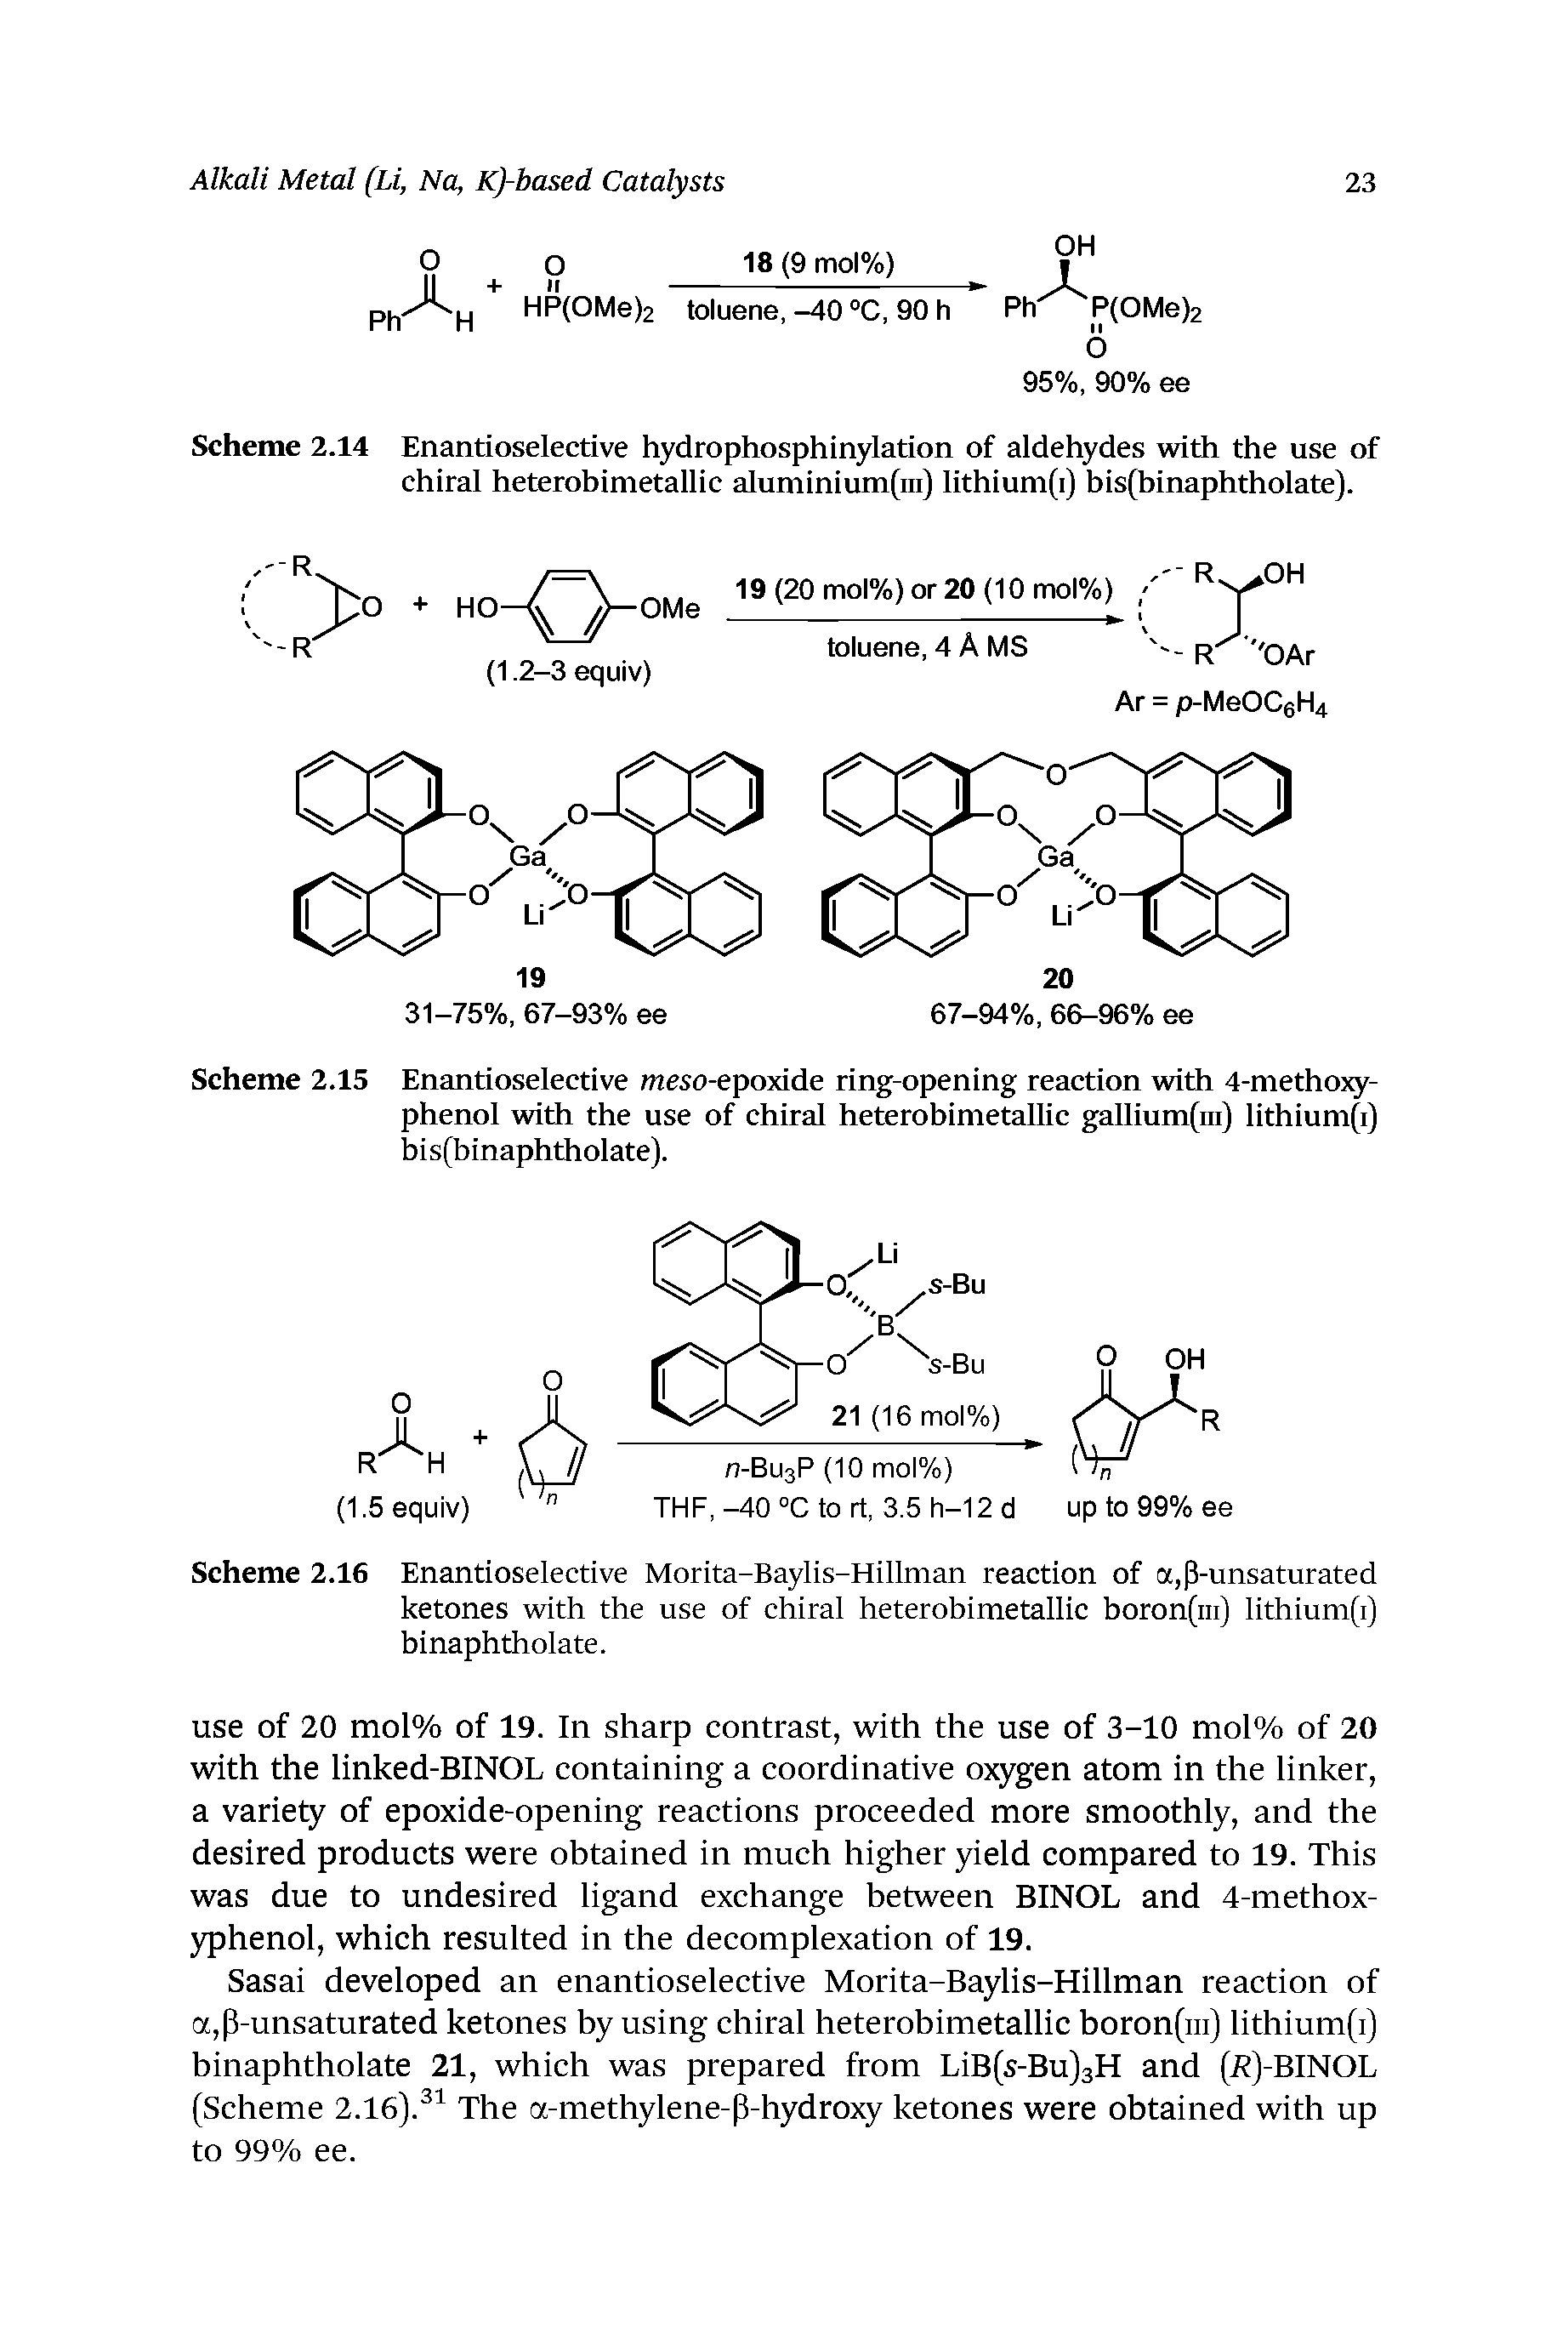 Scheme 2.15 Enantioselective meso-epoxide ring-opening reaction with 4-metbojgr-pbenol witb tbe use of chiral heterobimetallic gallium(m) lithium(i) bis[binaphtholate).